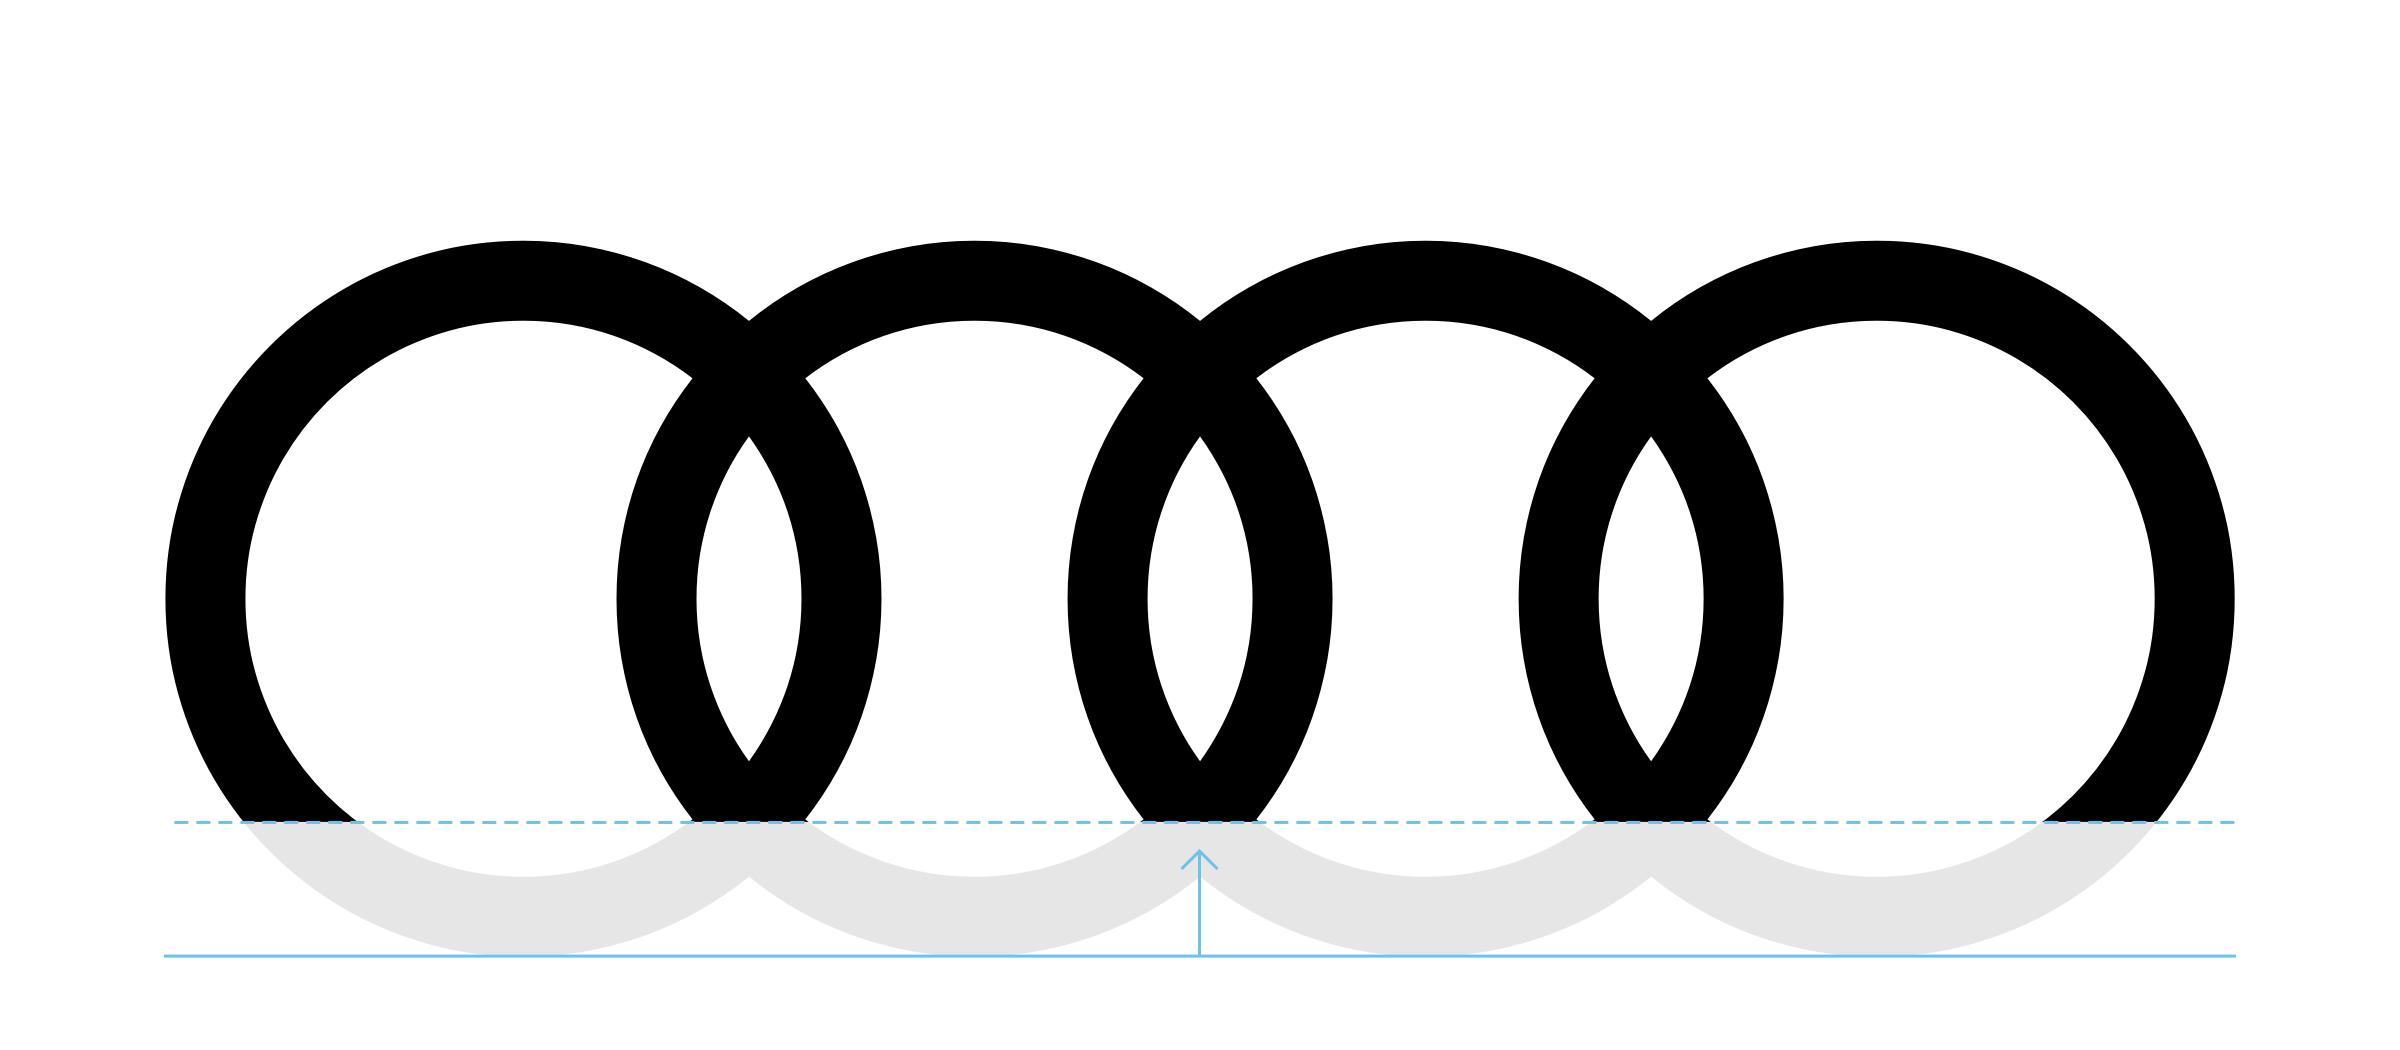 Download Audi Logo Png Transparent PNG Image with No Background - PNGkey.com